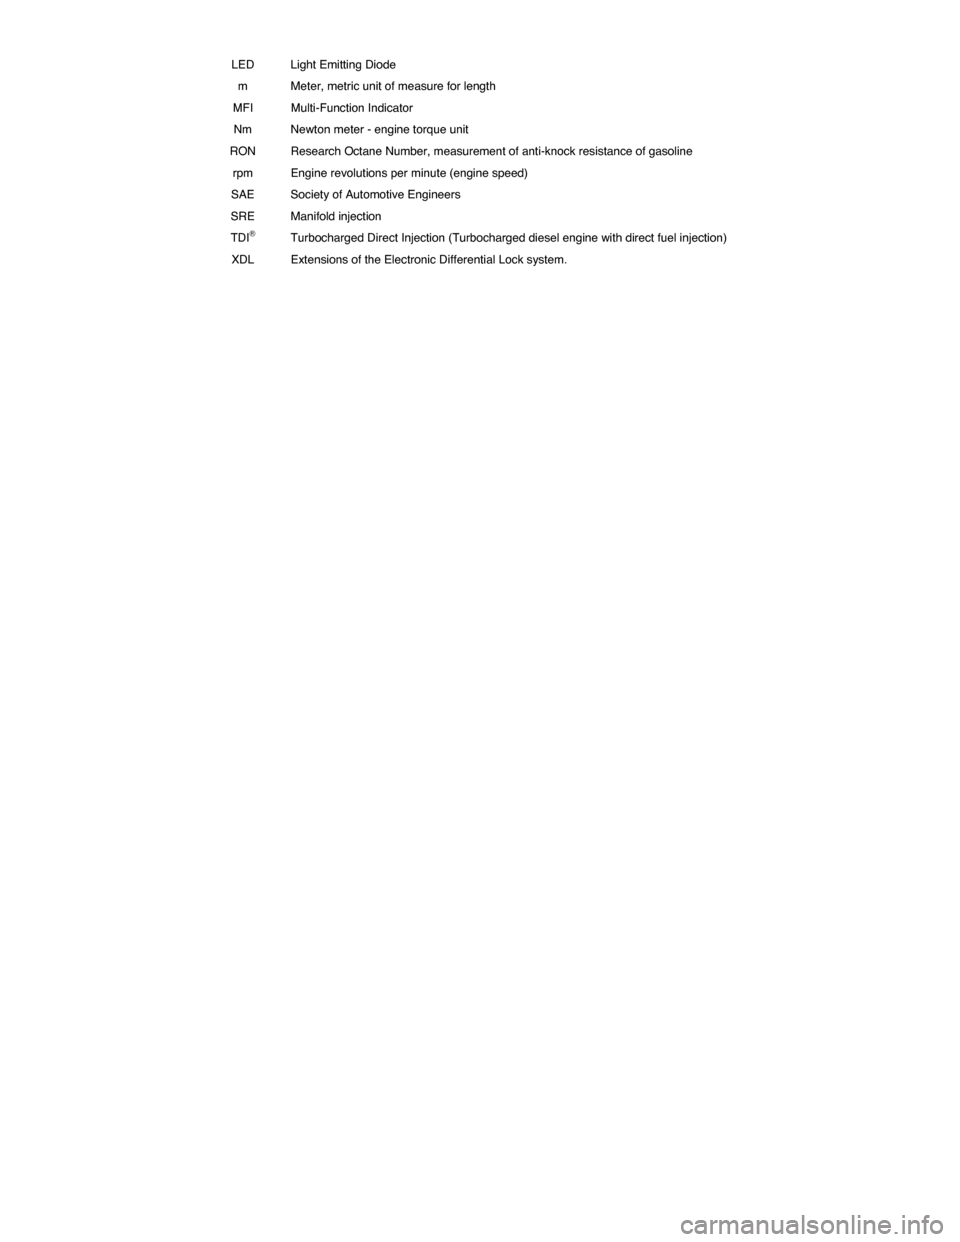 VOLKSWAGEN PASSAT 2015 B8 / 6.G Owners Manual  
LED  Light Emitting Diode 
m  Meter, metric unit of measure for length 
MFI  Multi-Function Indicator 
Nm  Newton meter - engine torque unit 
RON  Research Octane Number, measurement of anti-knock r